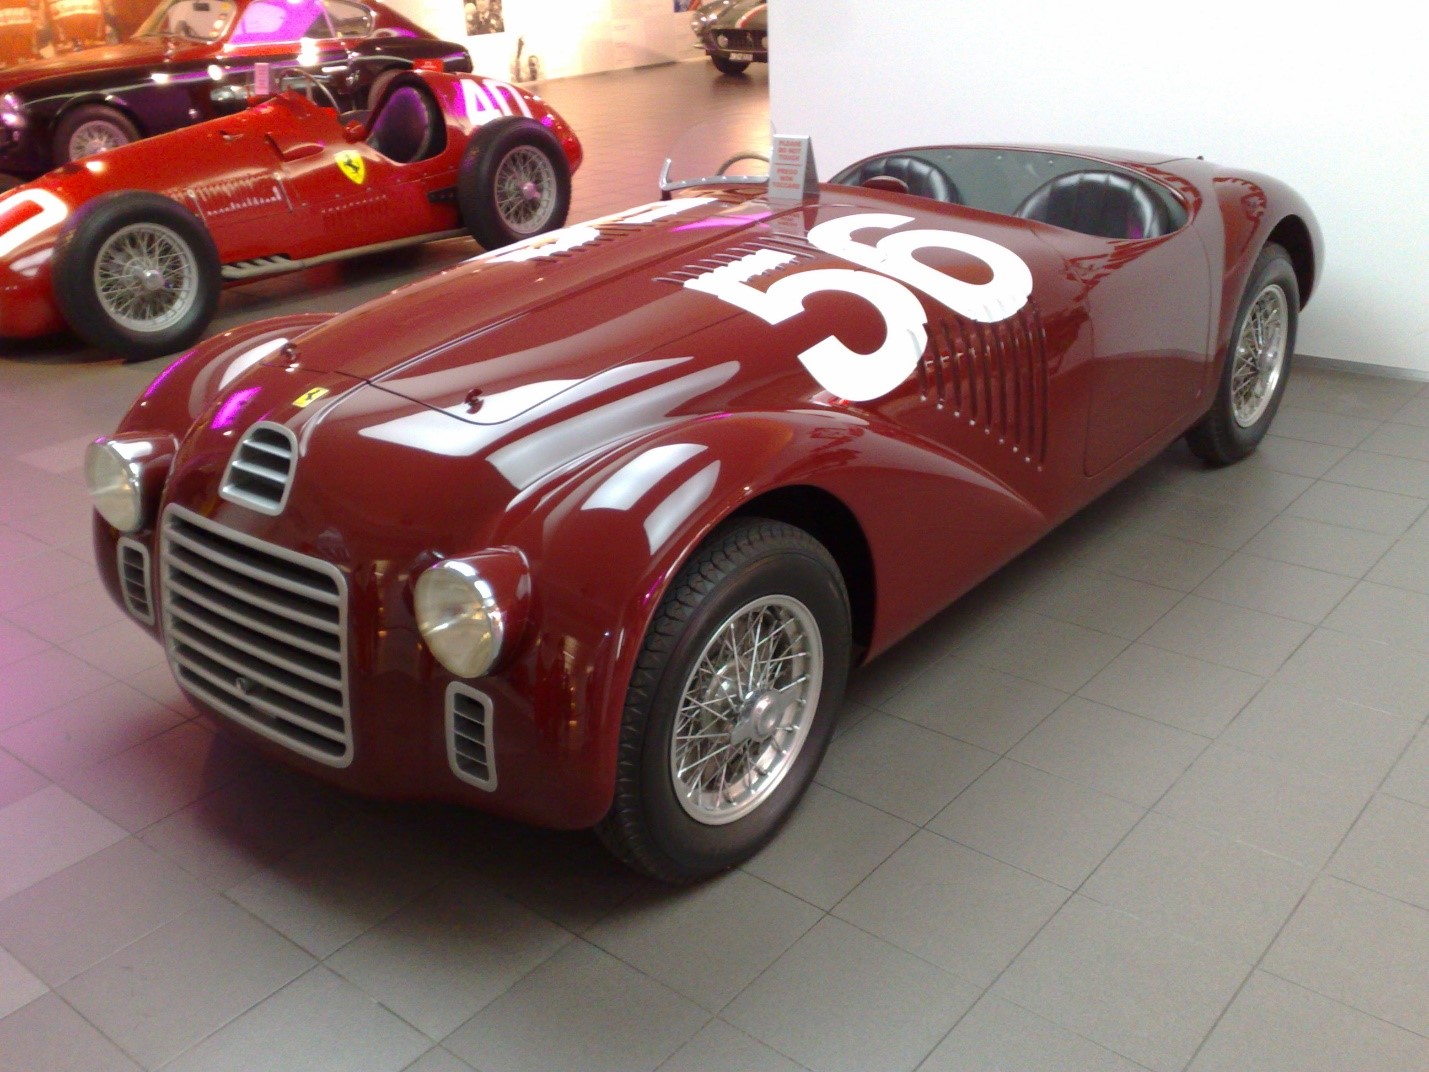 The Ferrari 125 S.